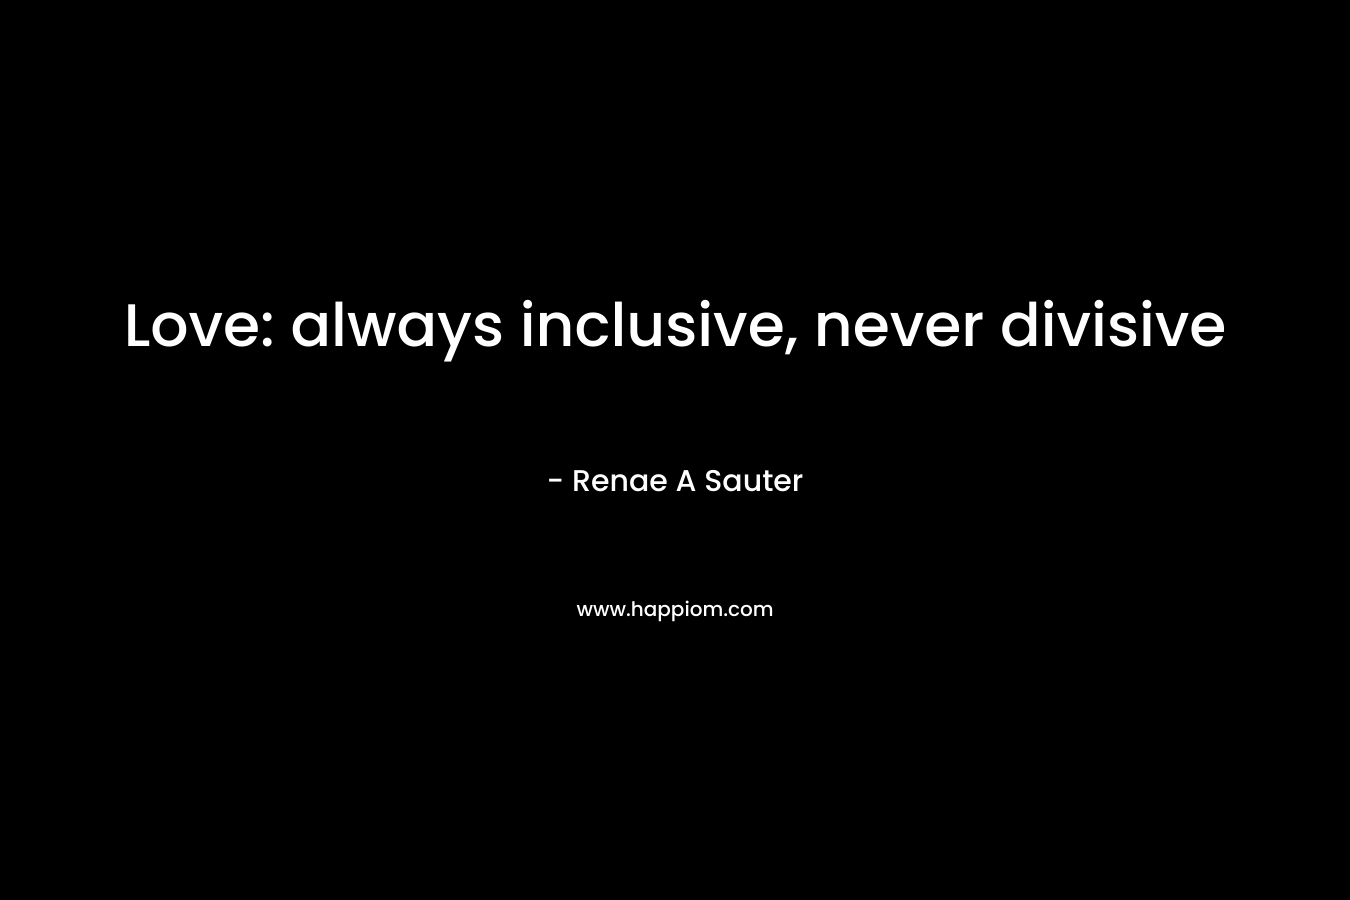 Love: always inclusive, never divisive